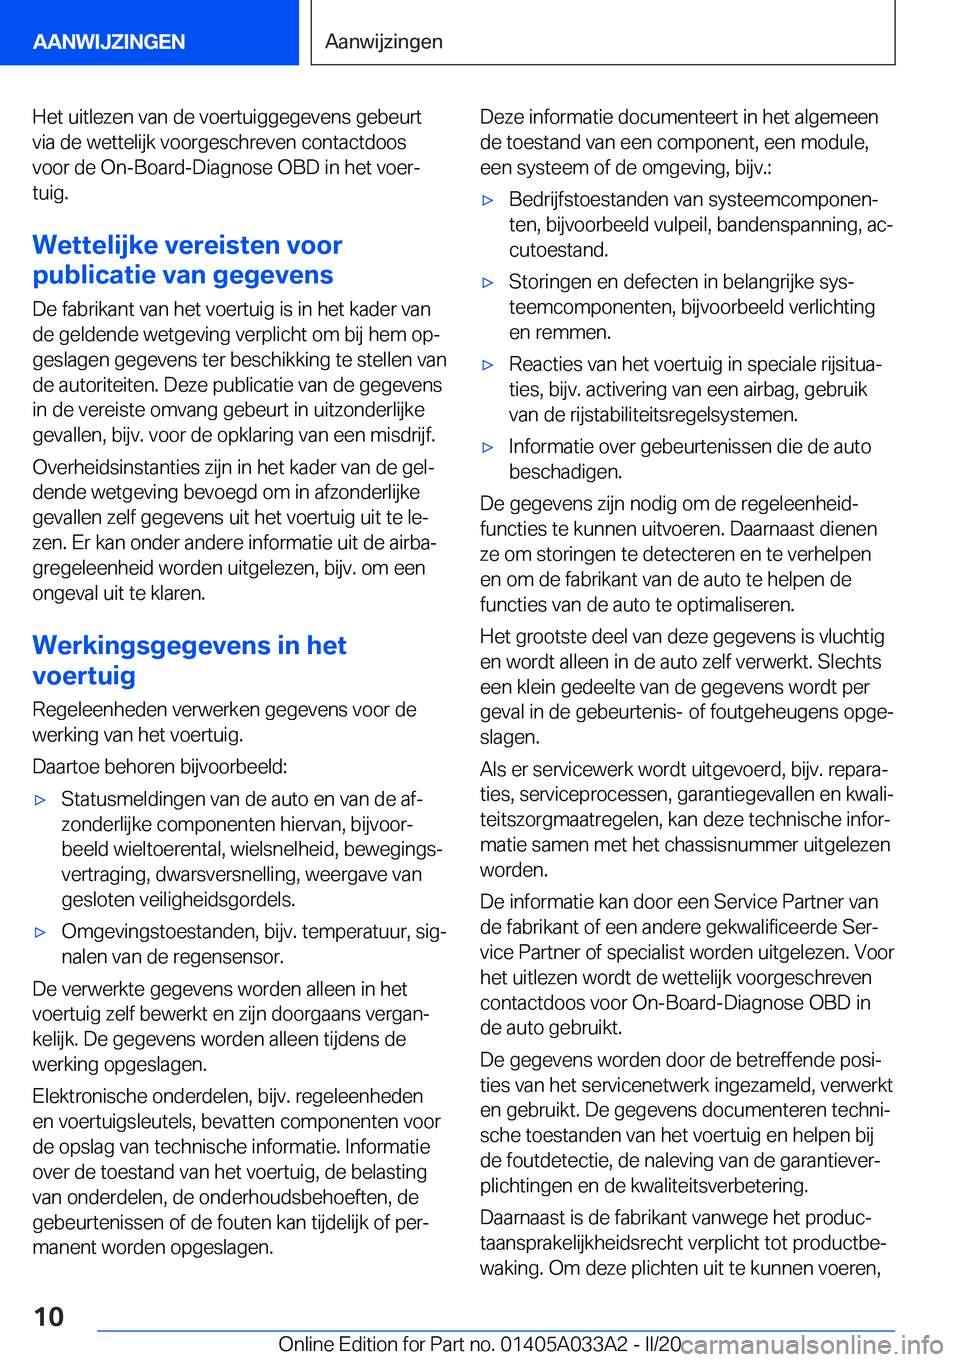 BMW M8 GRAN COUPE 2020  Instructieboekjes (in Dutch) �H�e�t��u�i�t�l�e�z�e�n��v�a�n��d�e��v�o�e�r�t�u�i�g�g�e�g�e�v�e�n�s��g�e�b�e�u�r�t�v�i�a��d�e��w�e�t�t�e�l�i�j�k��v�o�o�r�g�e�s�c�h�r�e�v�e�n��c�o�n�t�a�c�t�d�o�o�s
�v�o�o�r��d�e��O�n�-�B�